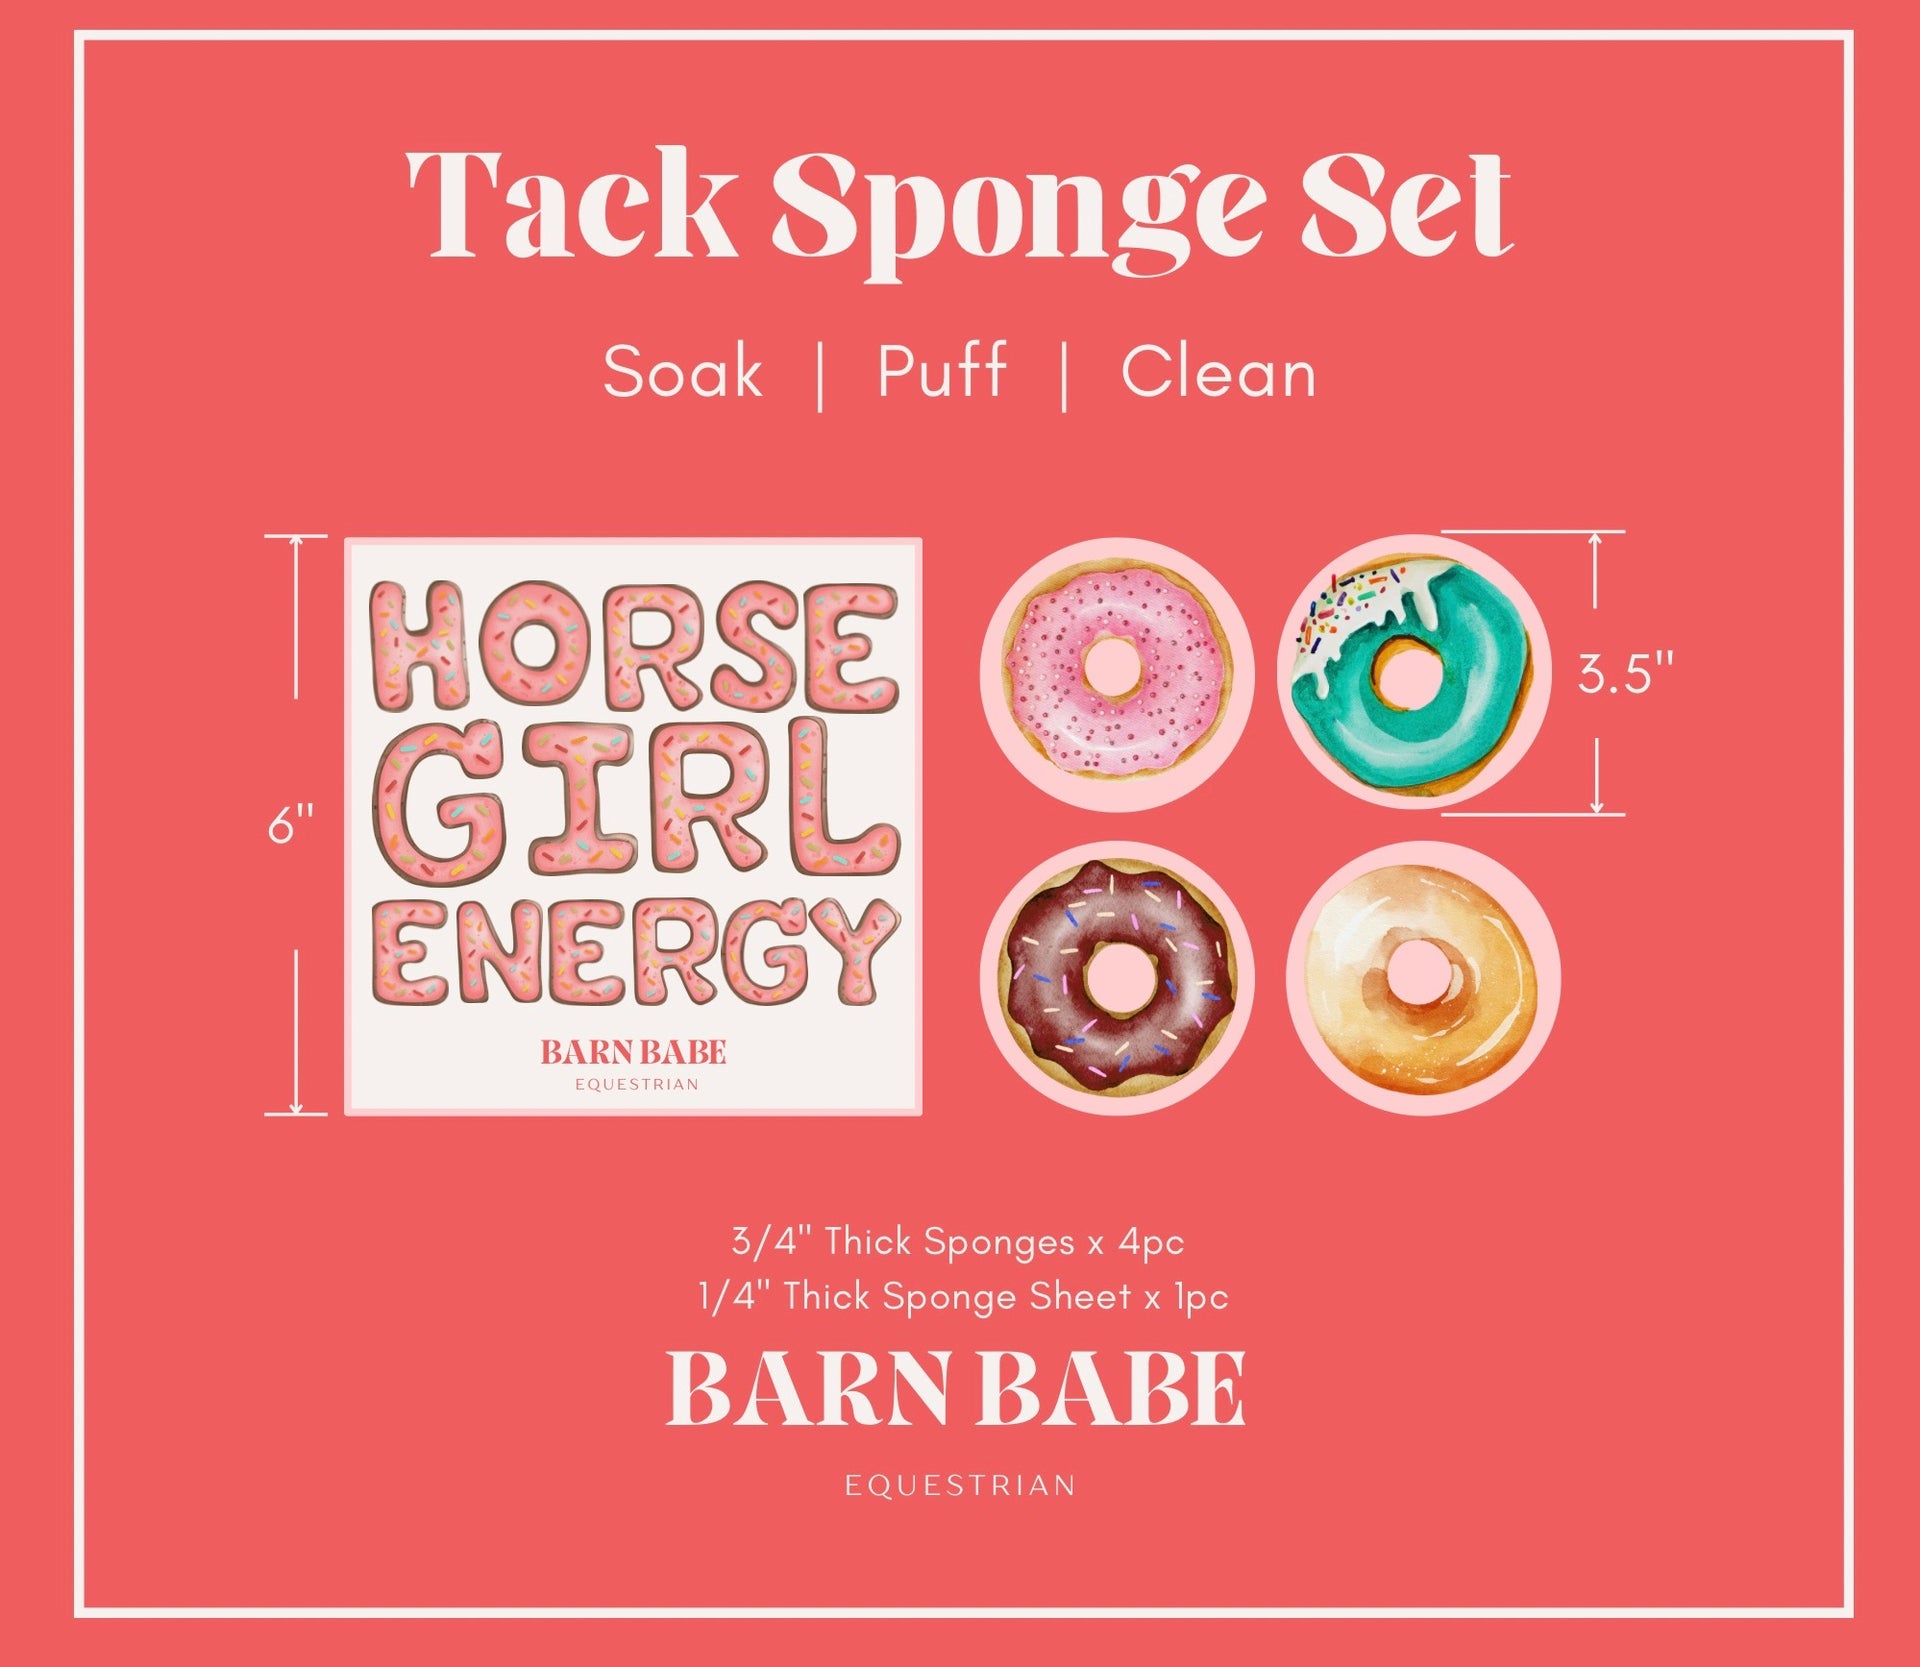 5-pc Tack Sponge Set – Barn Babe Equestrian